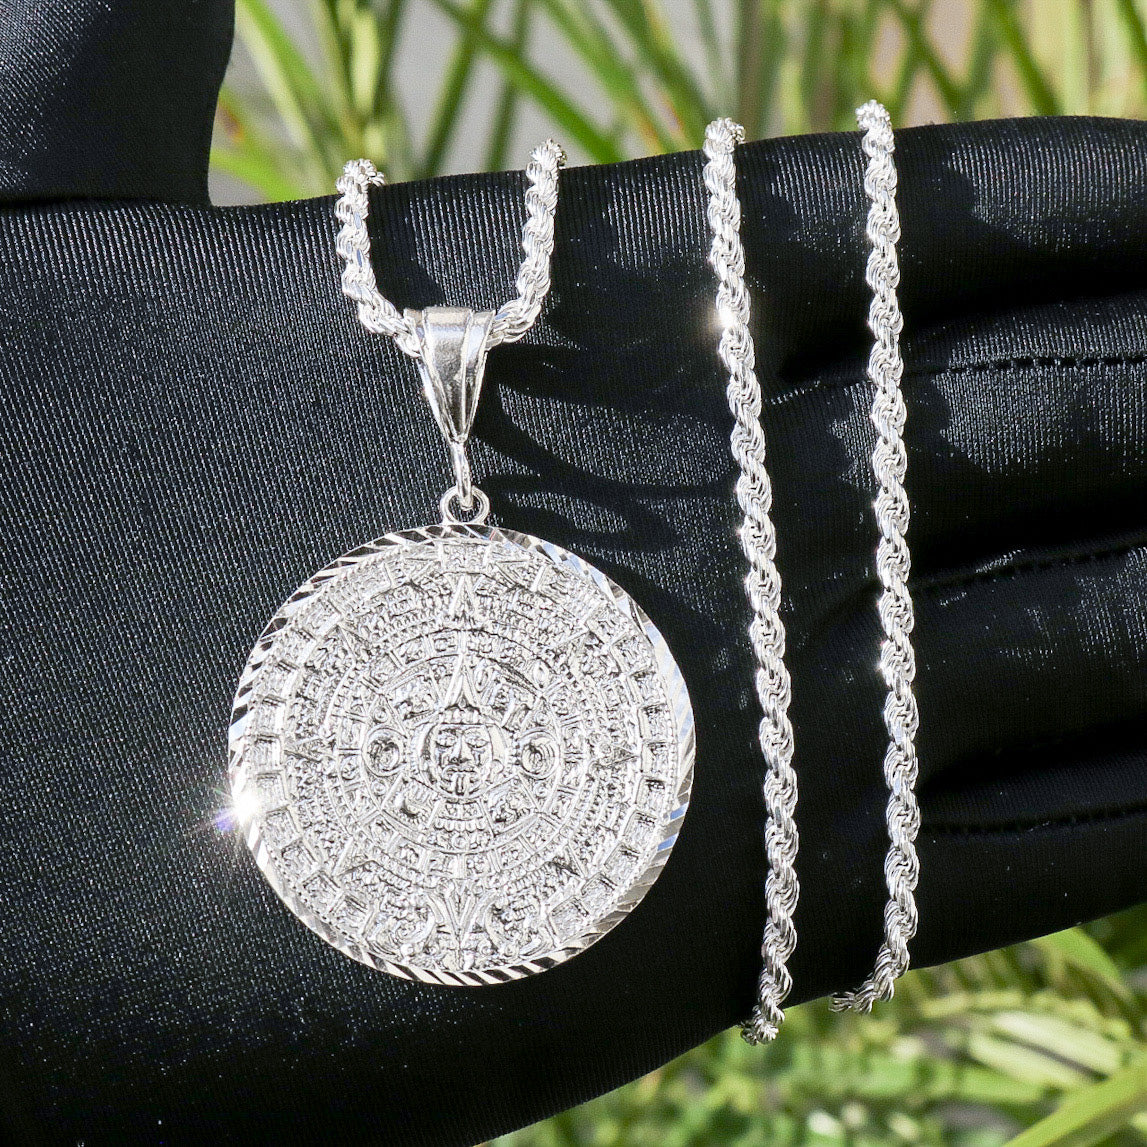 Aztec Calendar Pendant- Real 925 Silver is